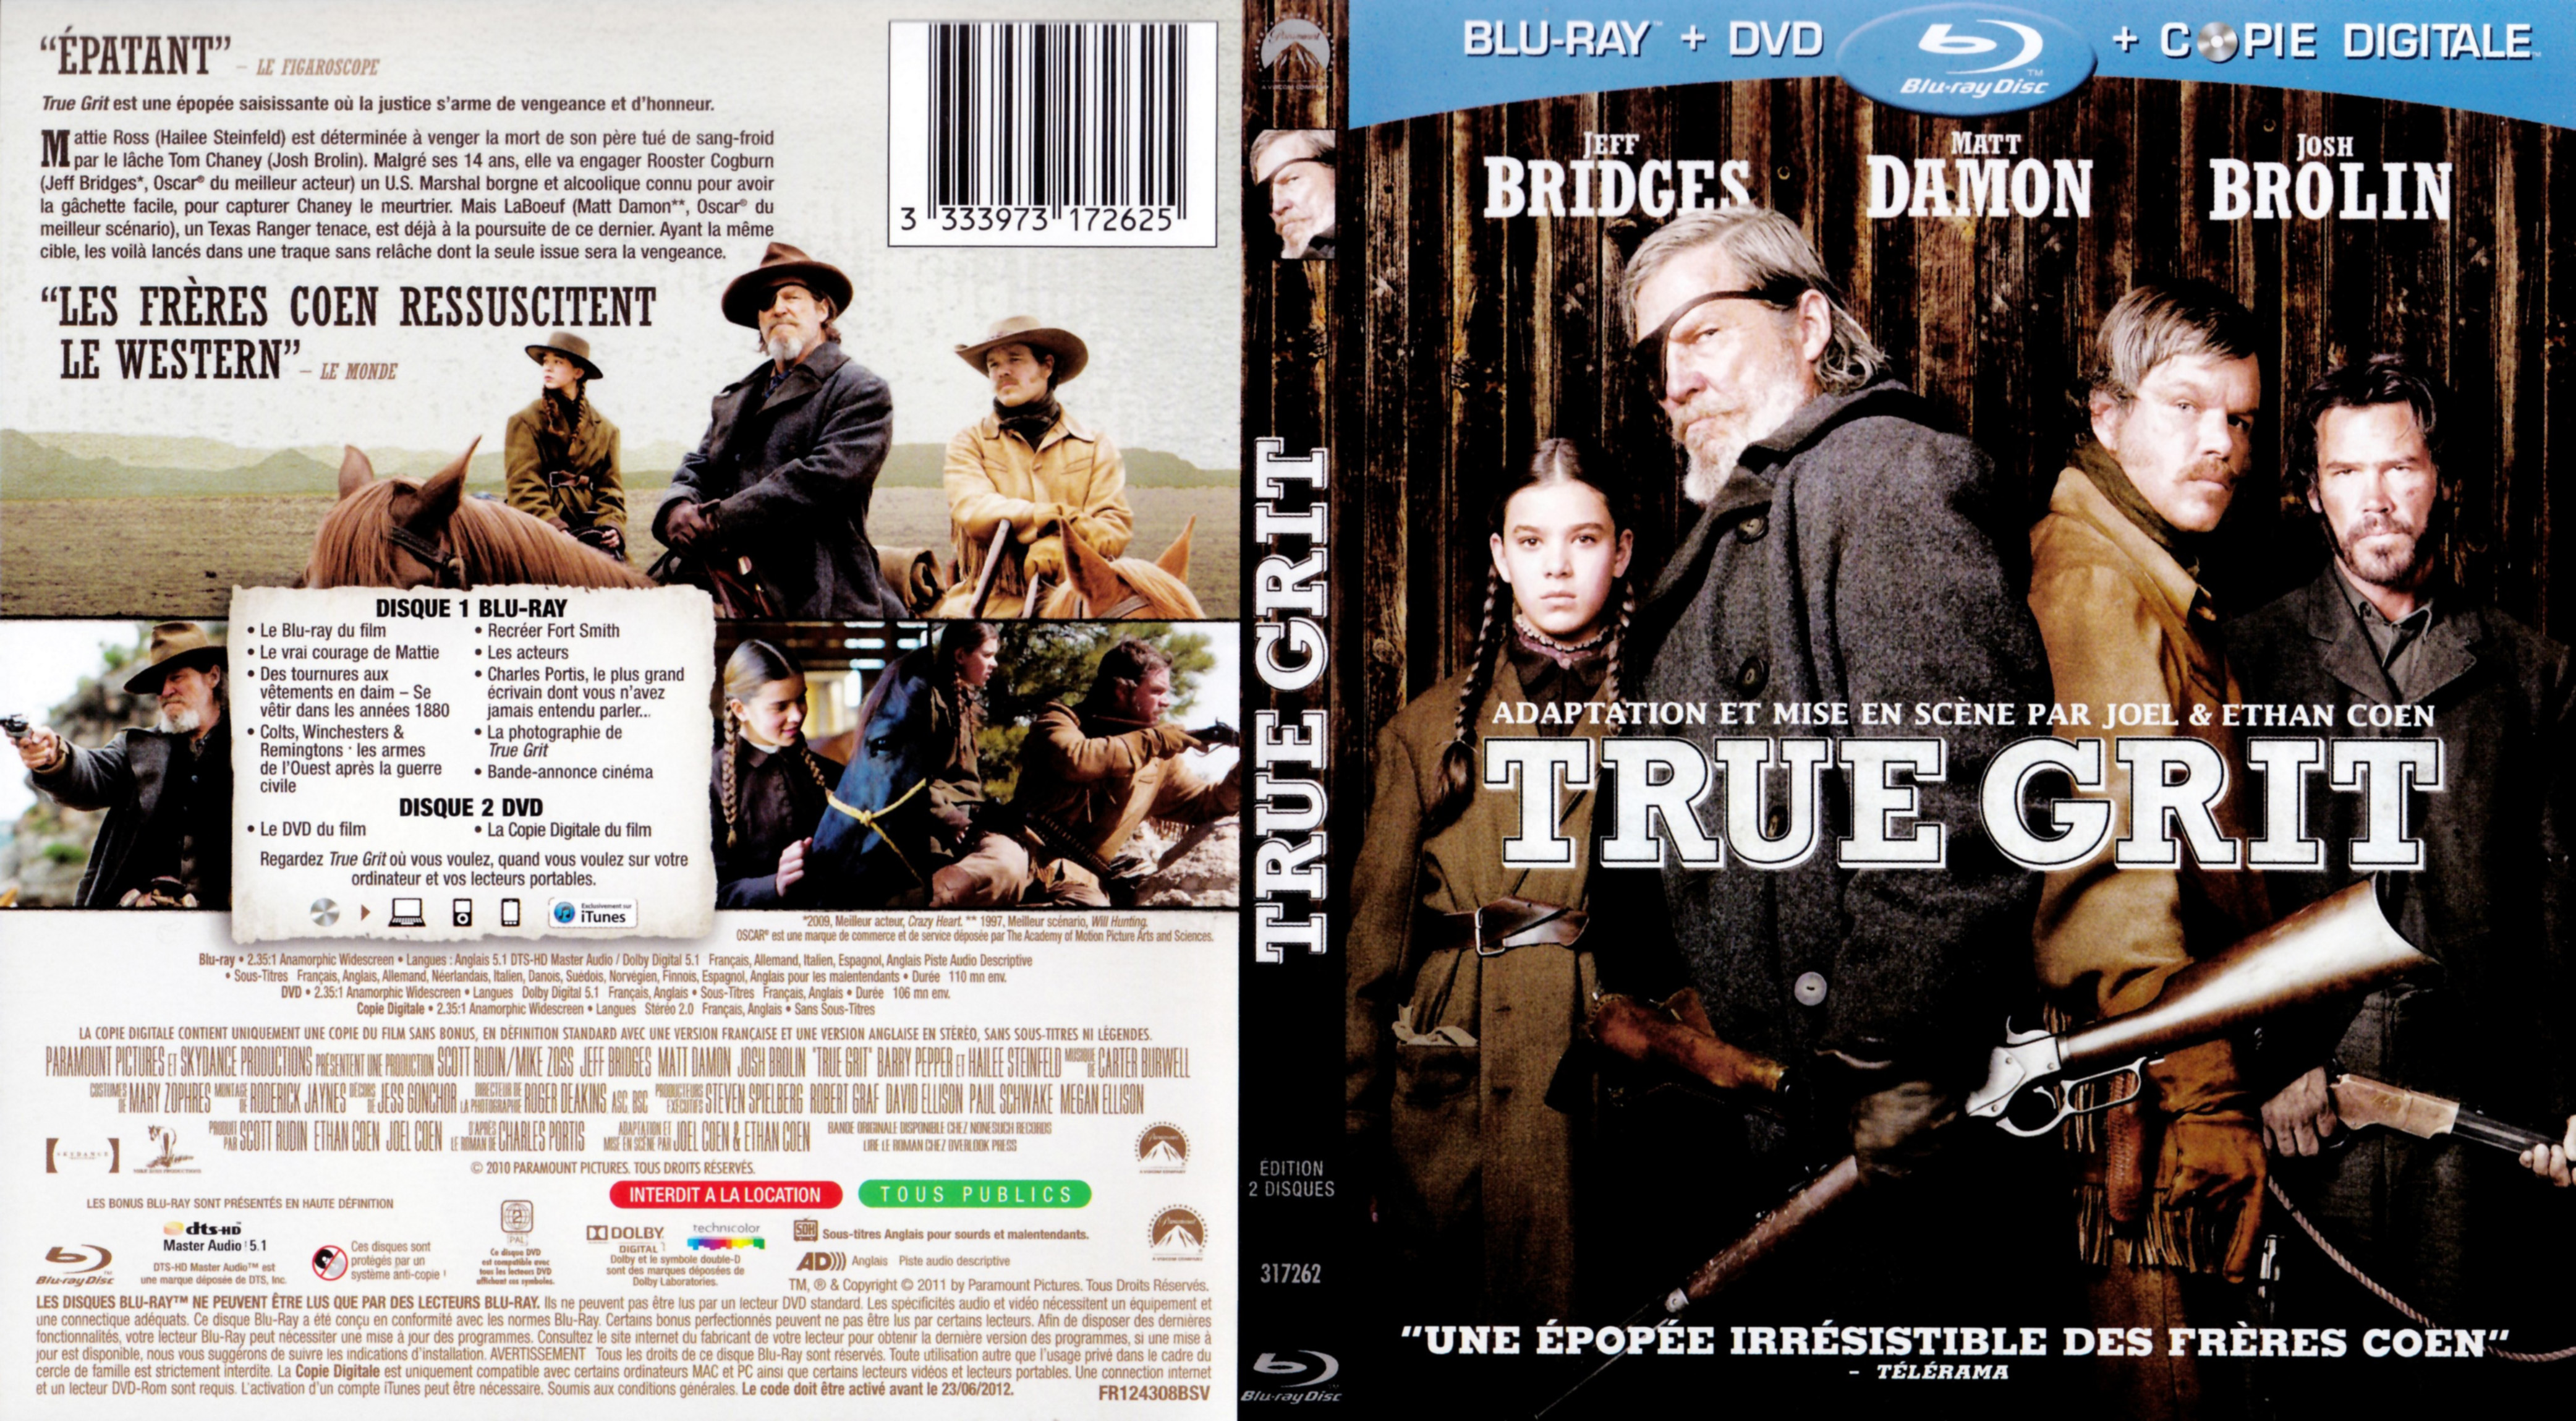 Jaquette DVD True grit (2011) (BLU-RAY)